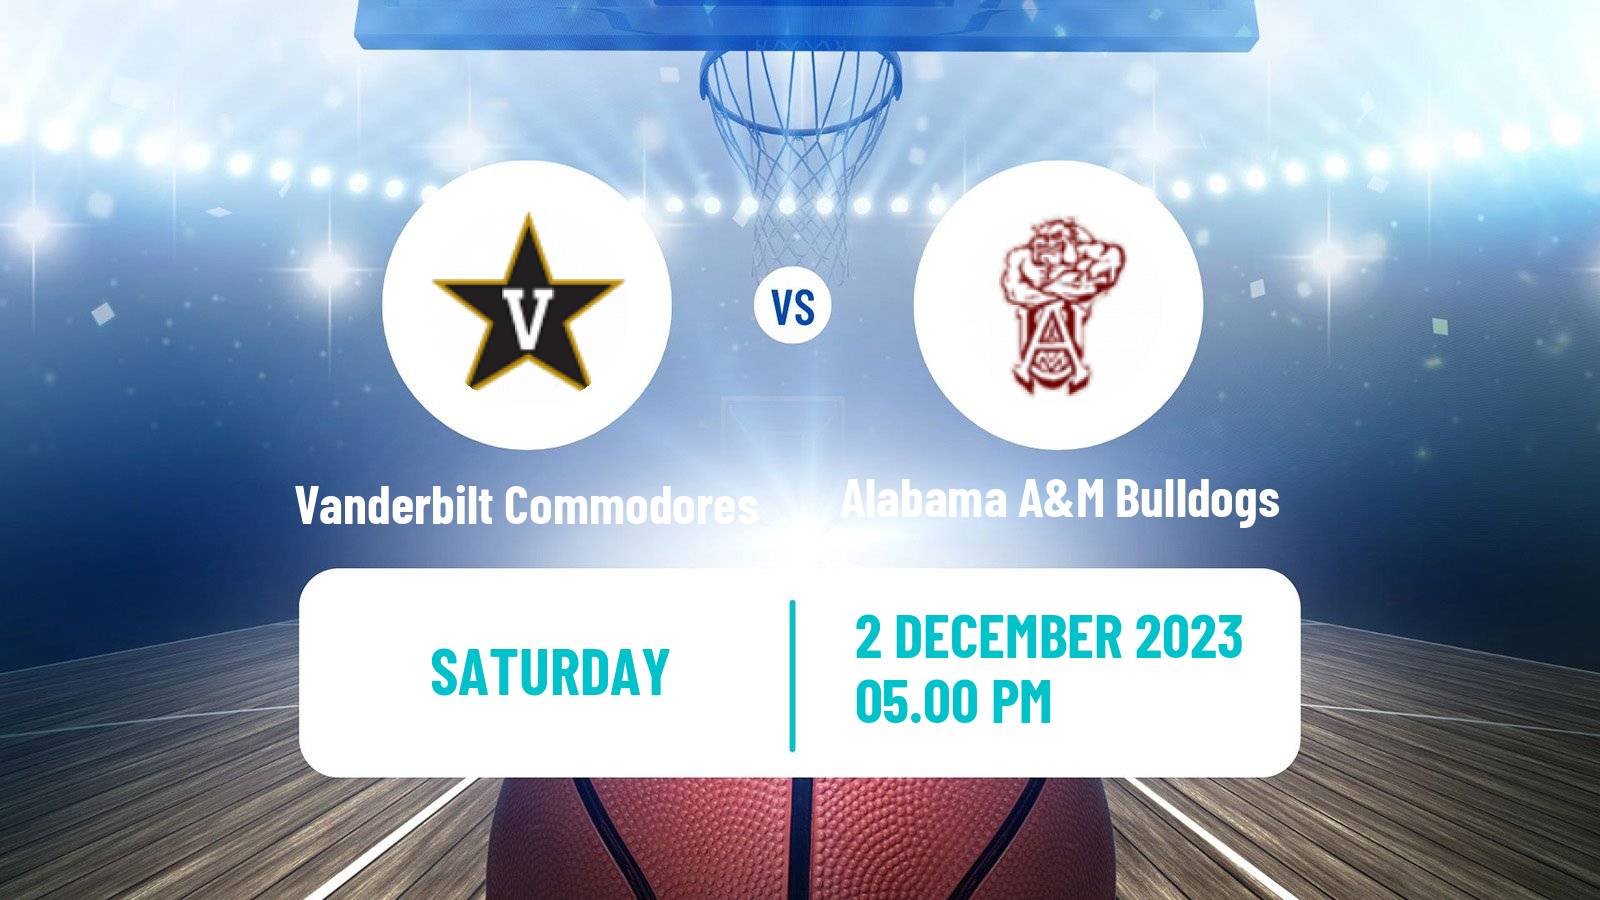 Basketball NCAA College Basketball Vanderbilt Commodores - Alabama A&M Bulldogs